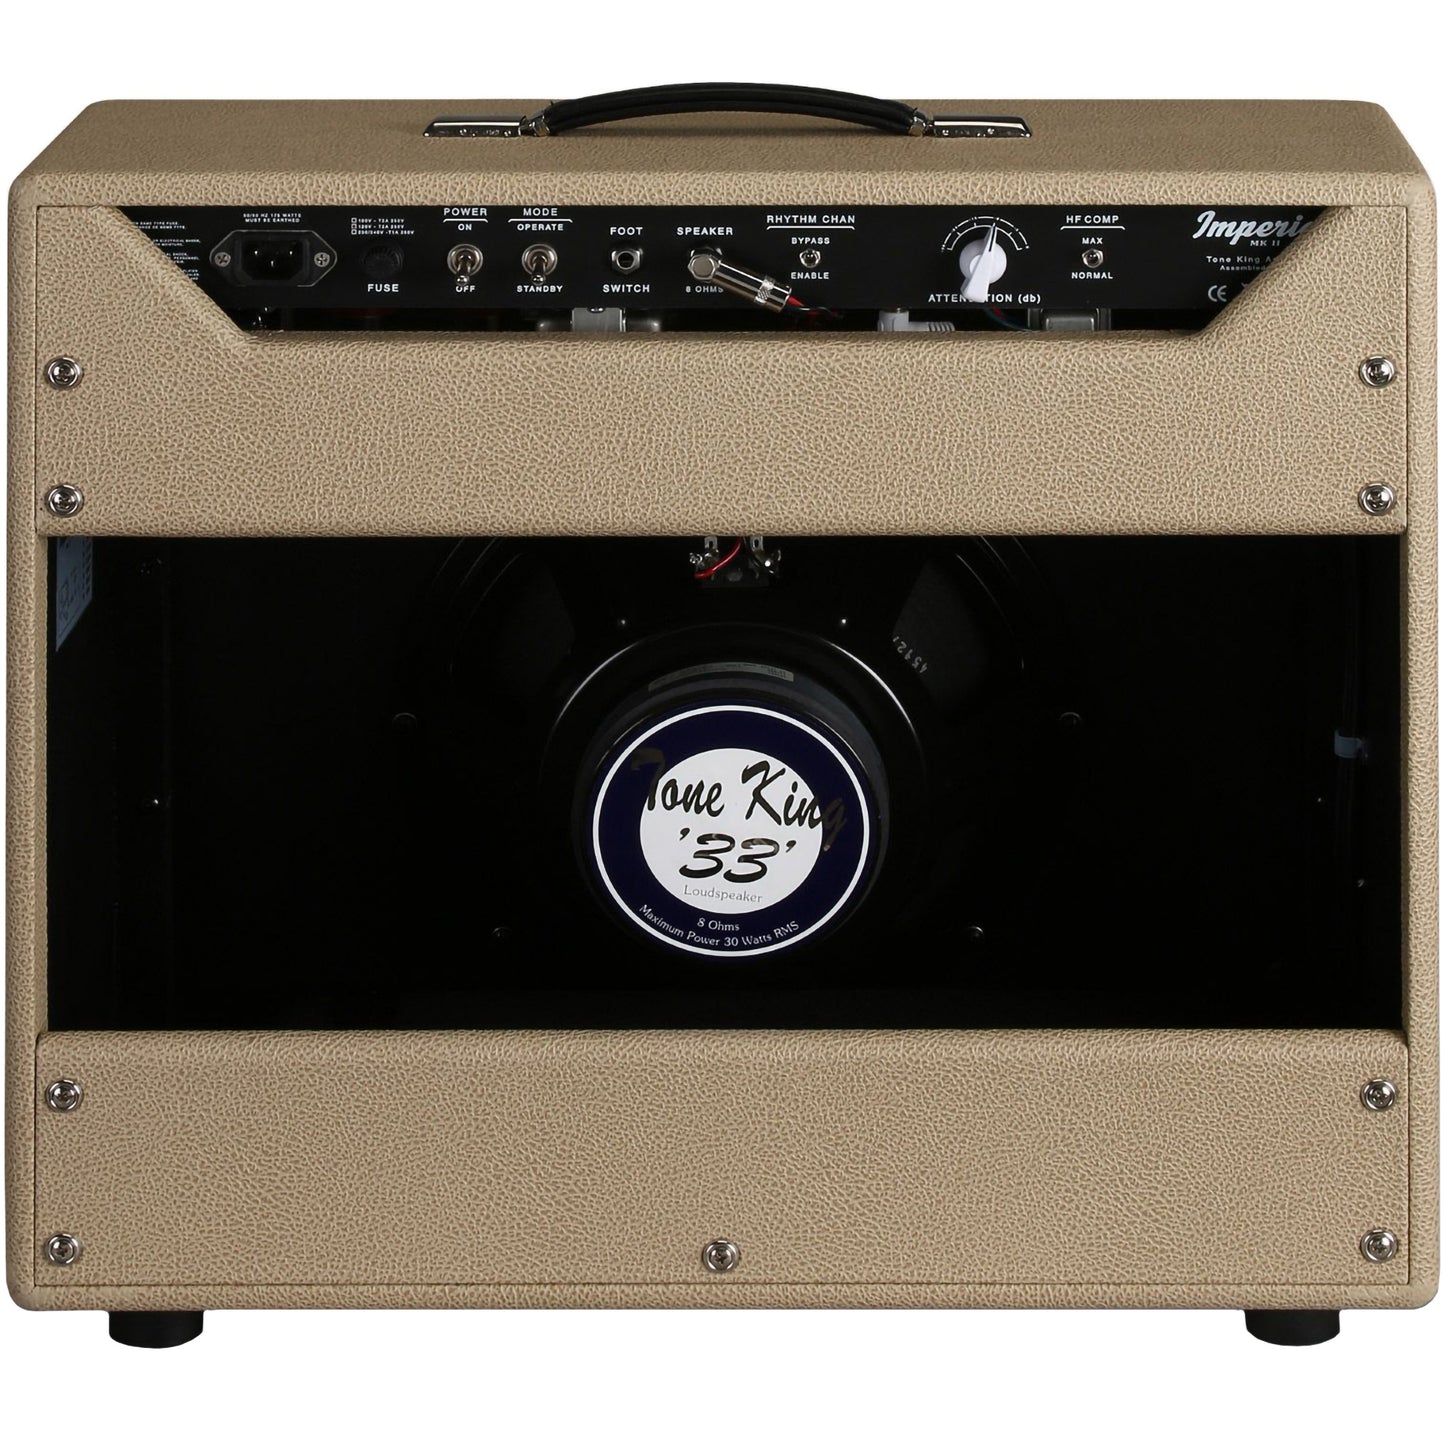 Tone King Imperial MKII 20-Watt 1x12" Tube Combo Guitar Amplifier